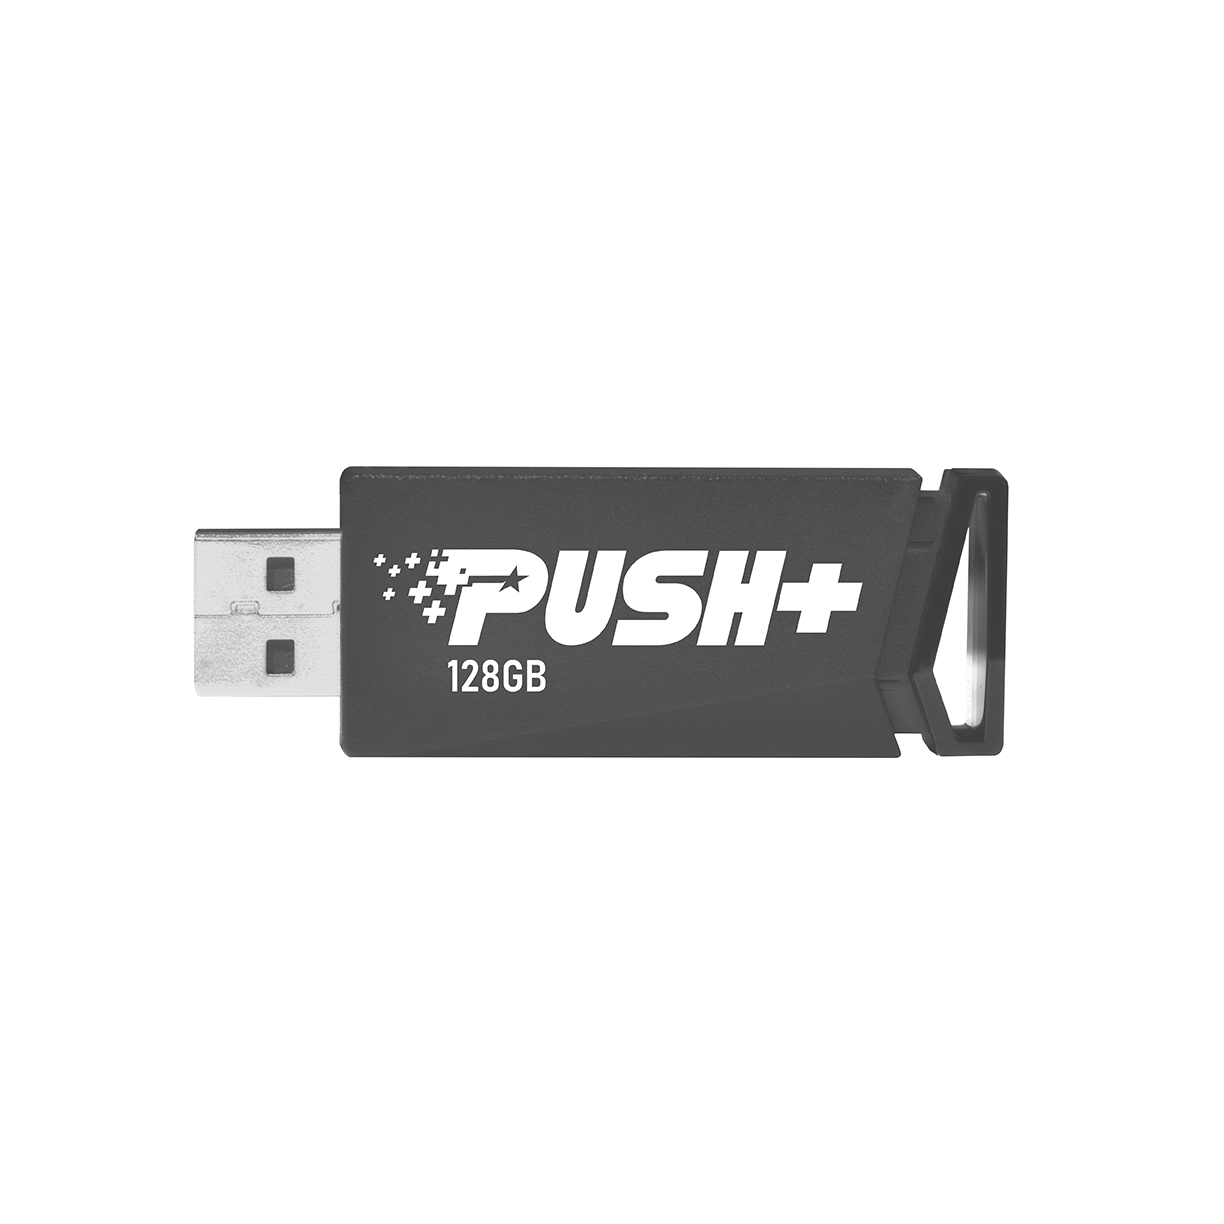 128GB USB3.2  Patriot PUSH+ Black, Capless design, Light weight of 10g (Read 45 MByte/s, Write 18 MByte/s)